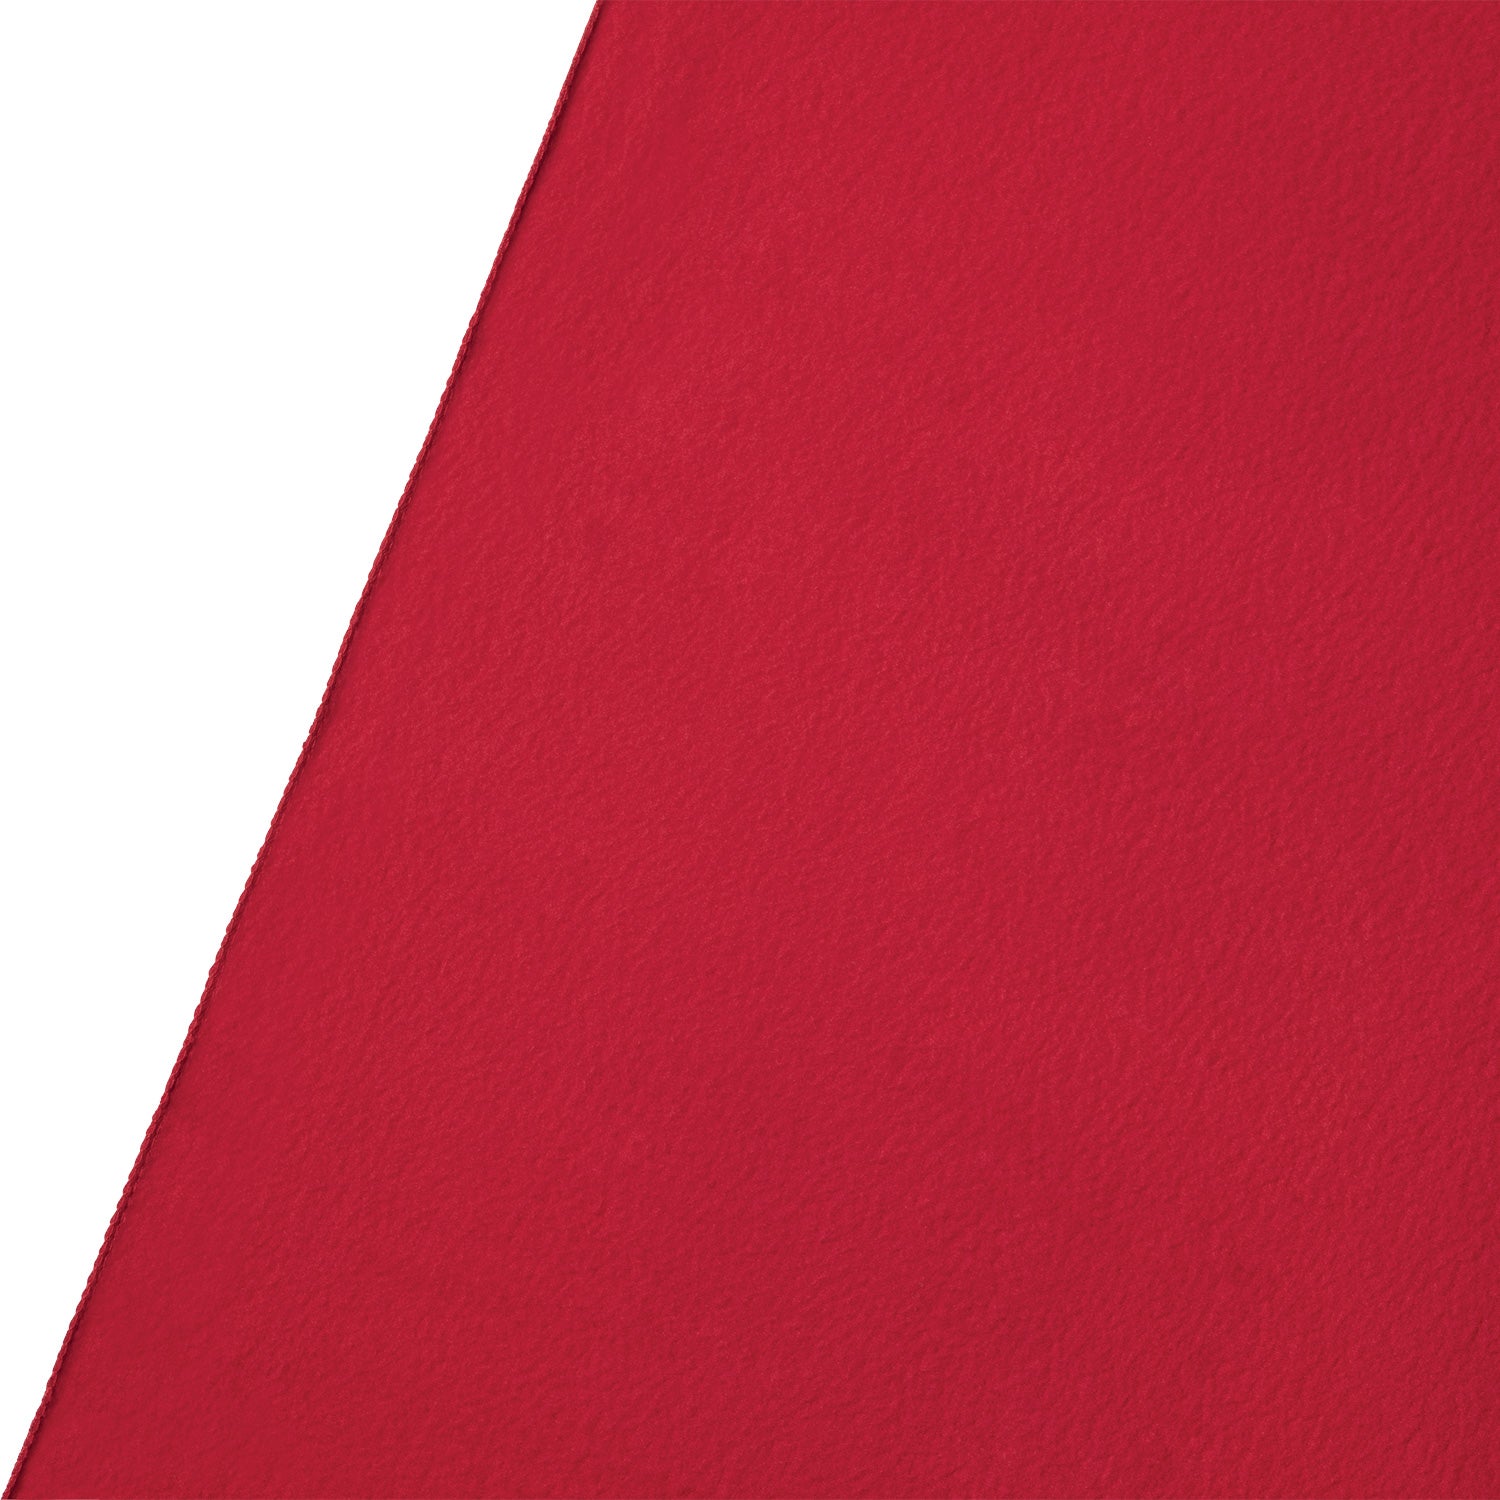 Wrinkle-Resistant Backdrop - Scarlet Red (9' x 10')